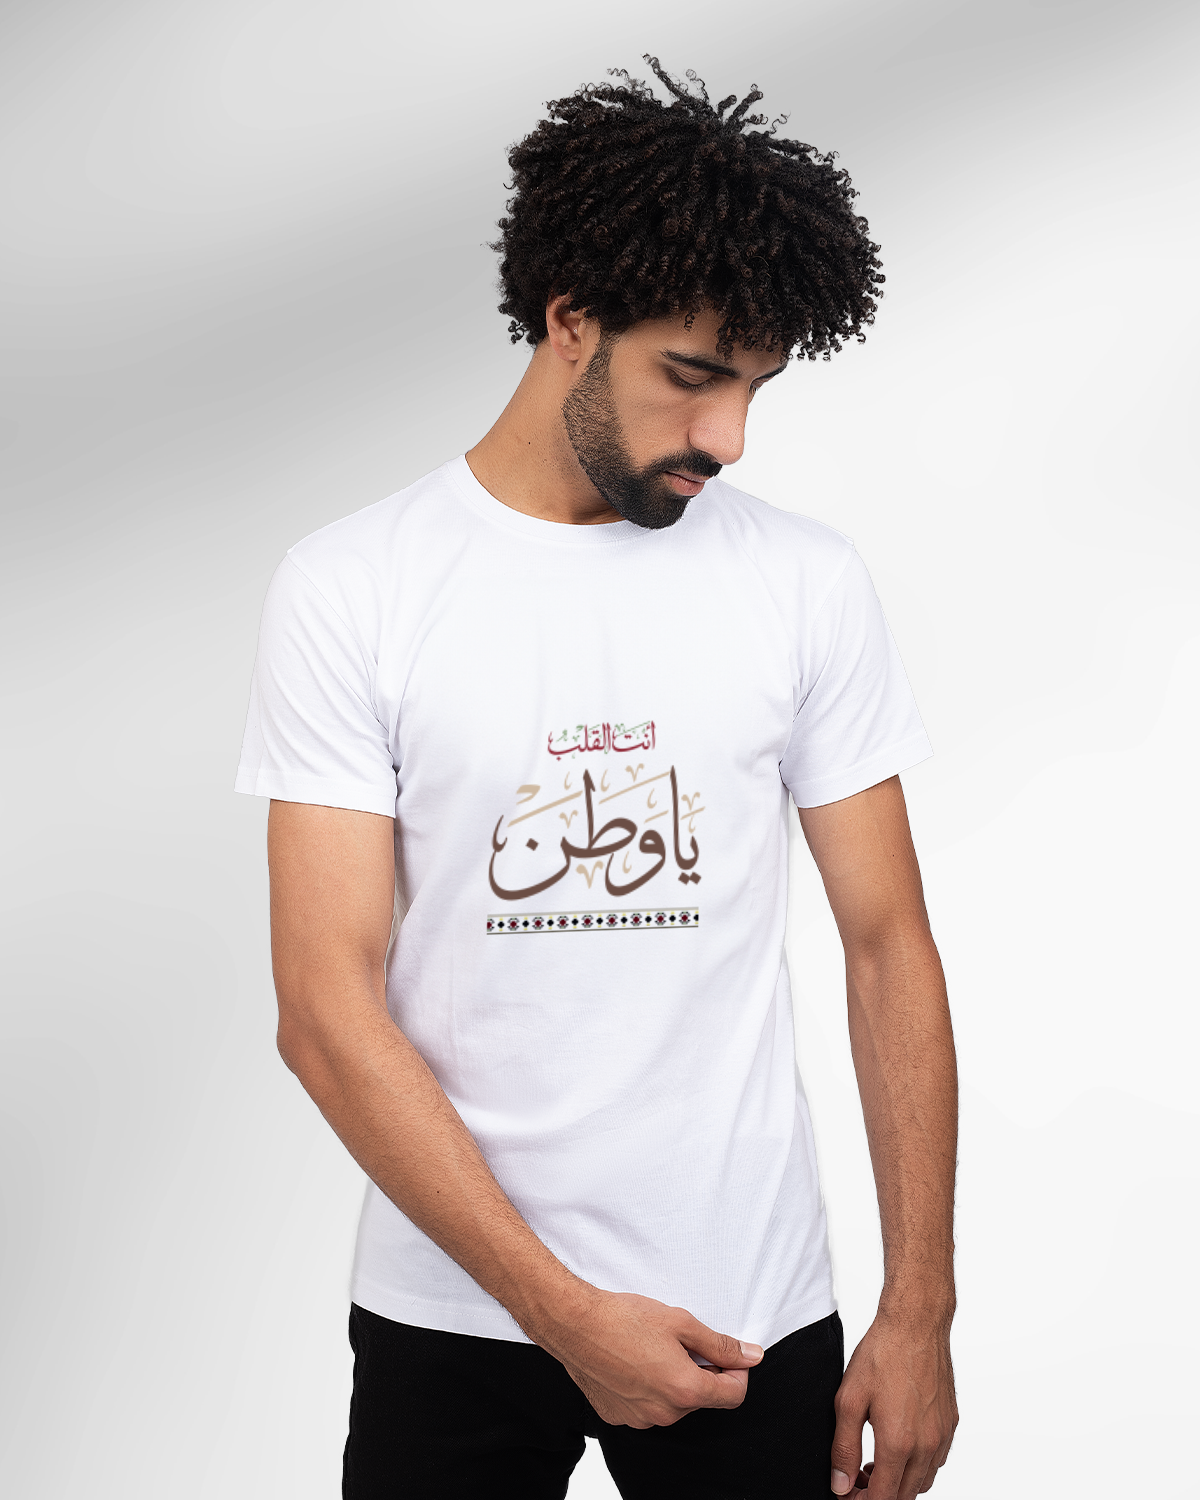 Men's Foundation Day T-shirt (Ant Alqalb Ya Watan)